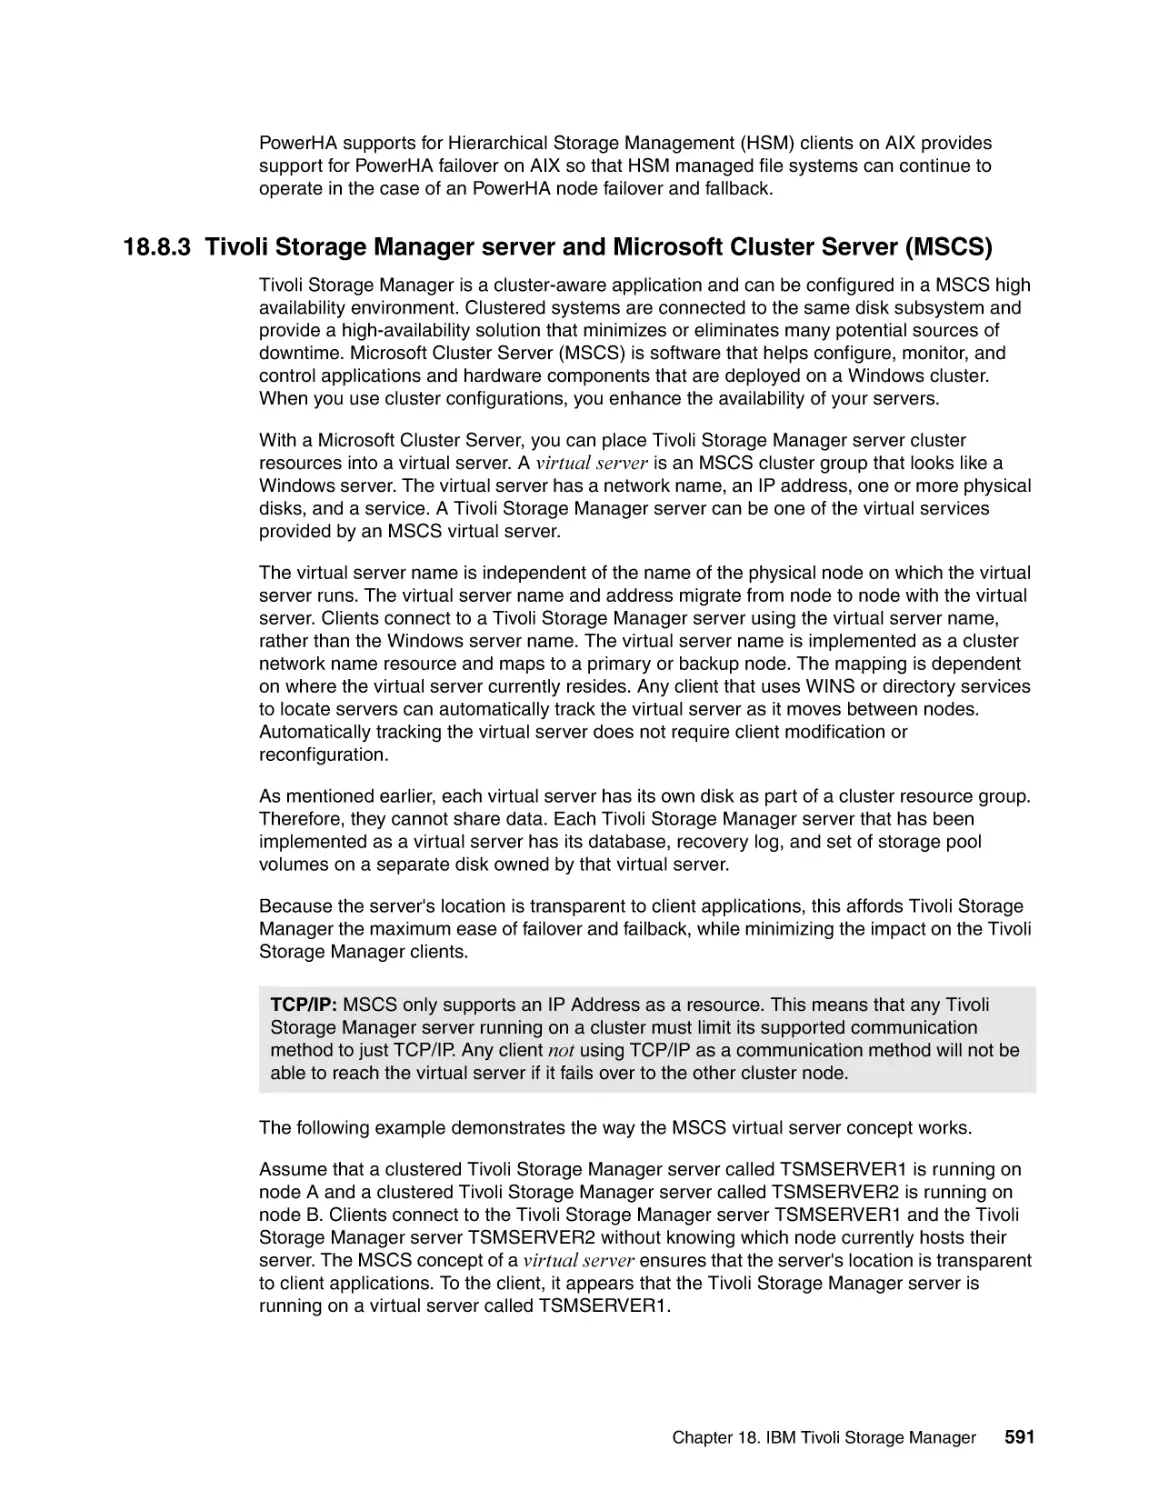 18.8.3 Tivoli Storage Manager server and Microsoft Cluster Server (MSCS)